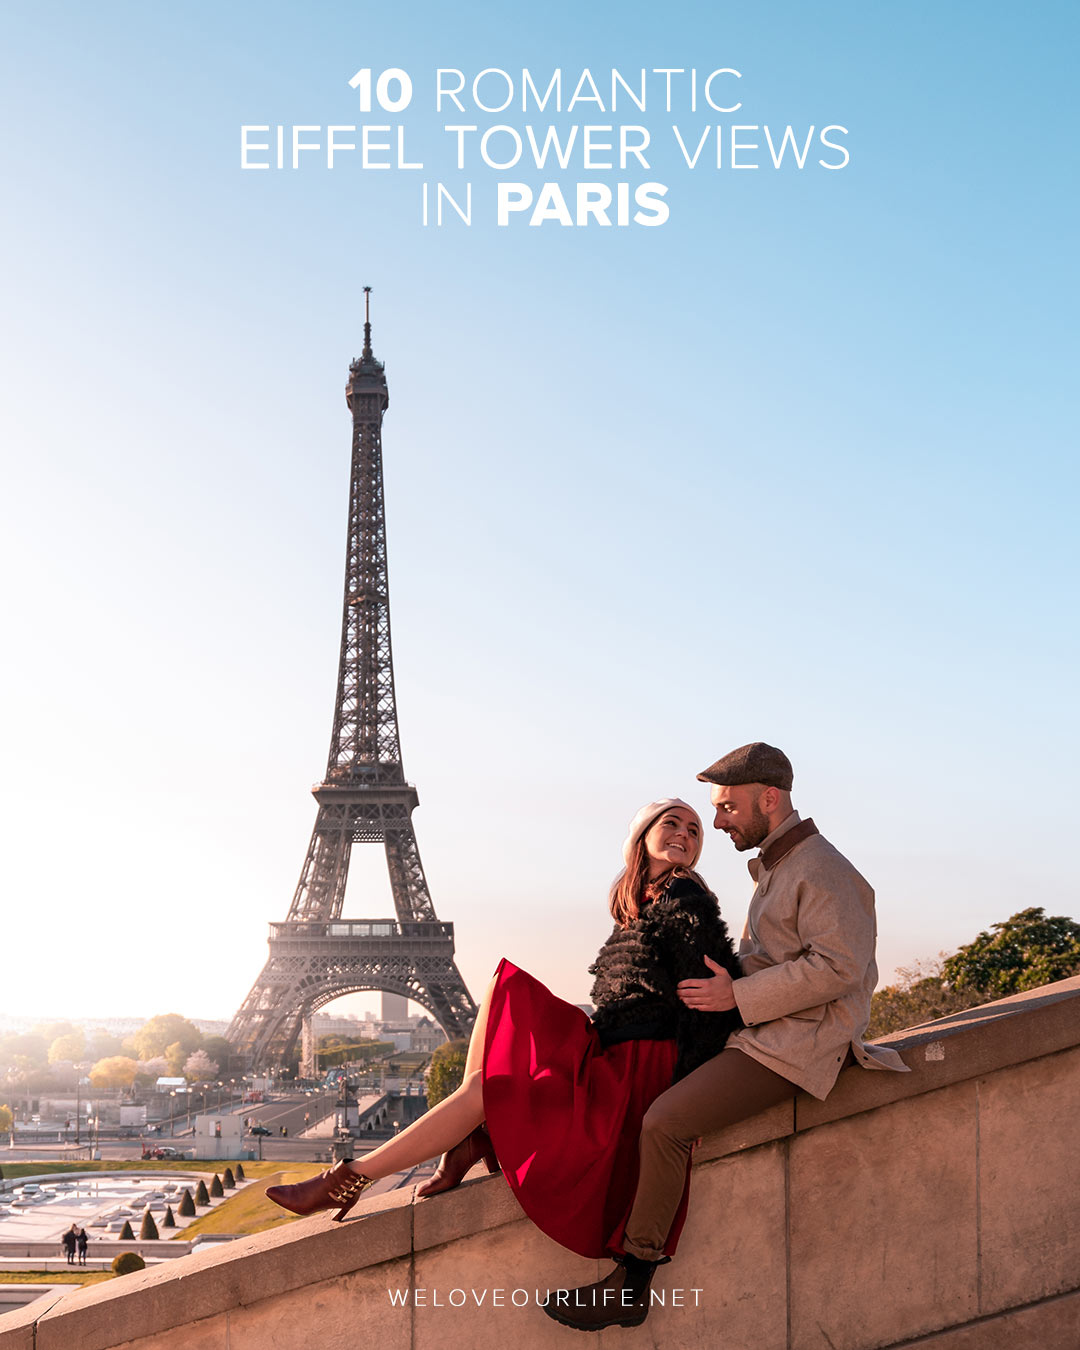 10 Romantic Eiffel Tower Views in Paris